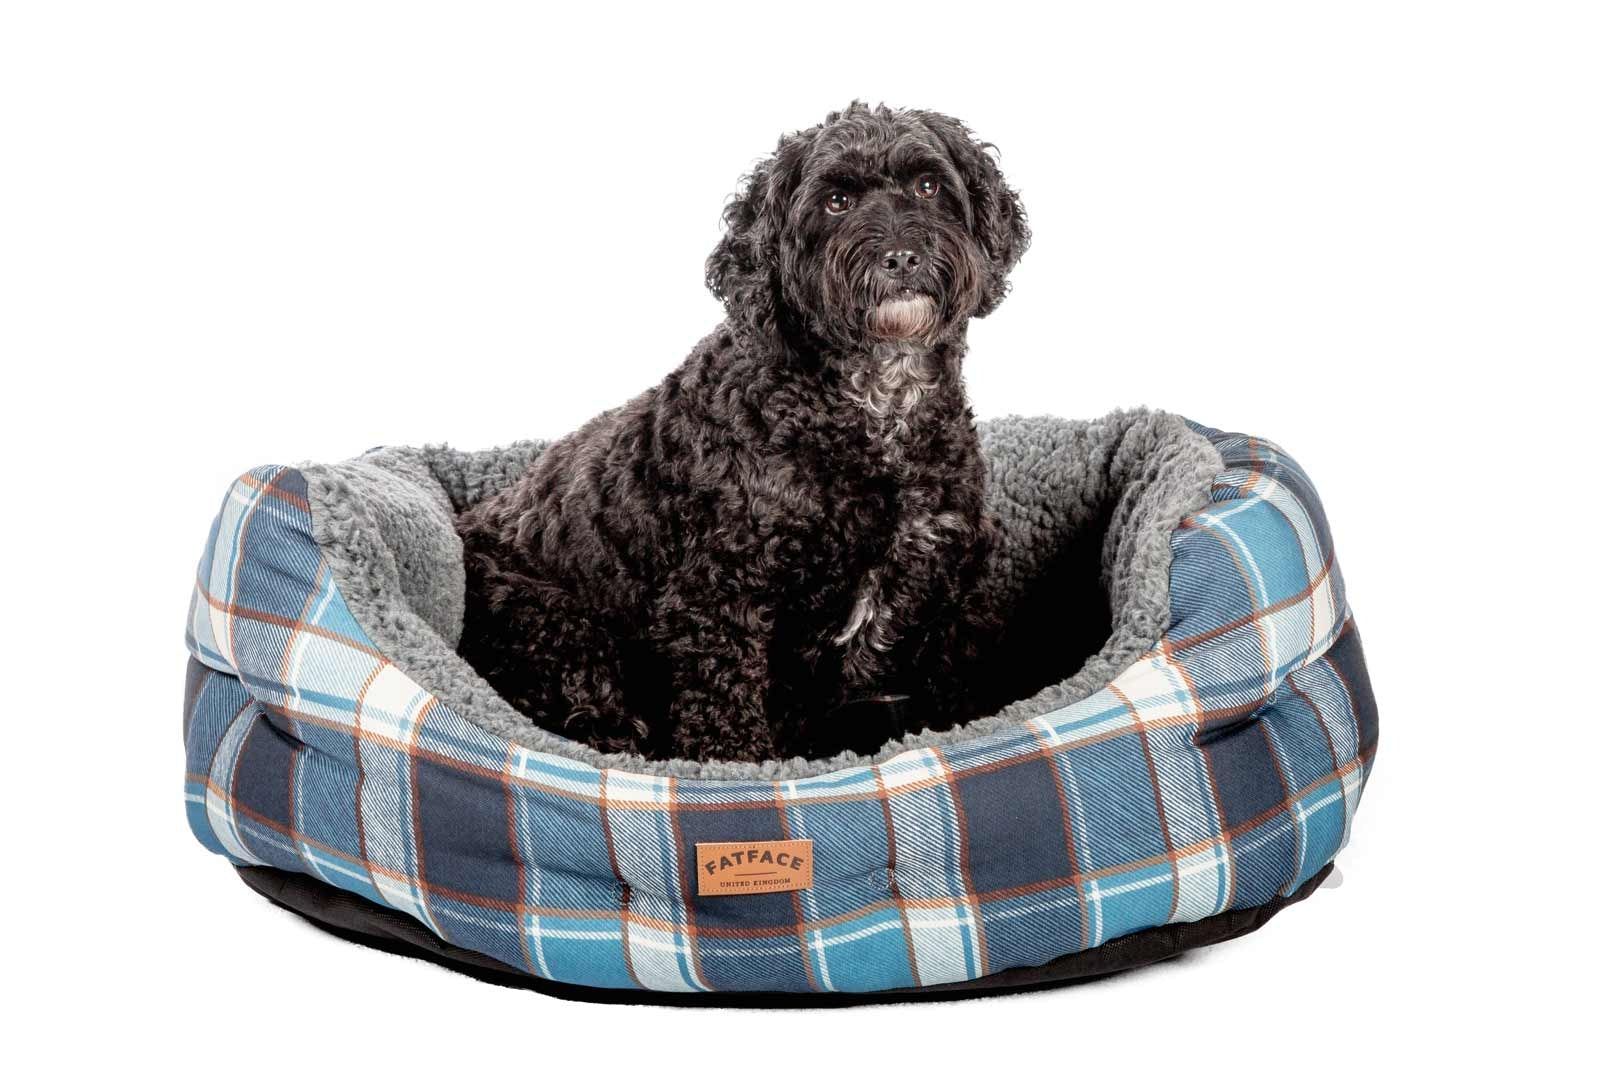 FatFace Fleece Check Deluxe Slumber Dog Bed with Dog